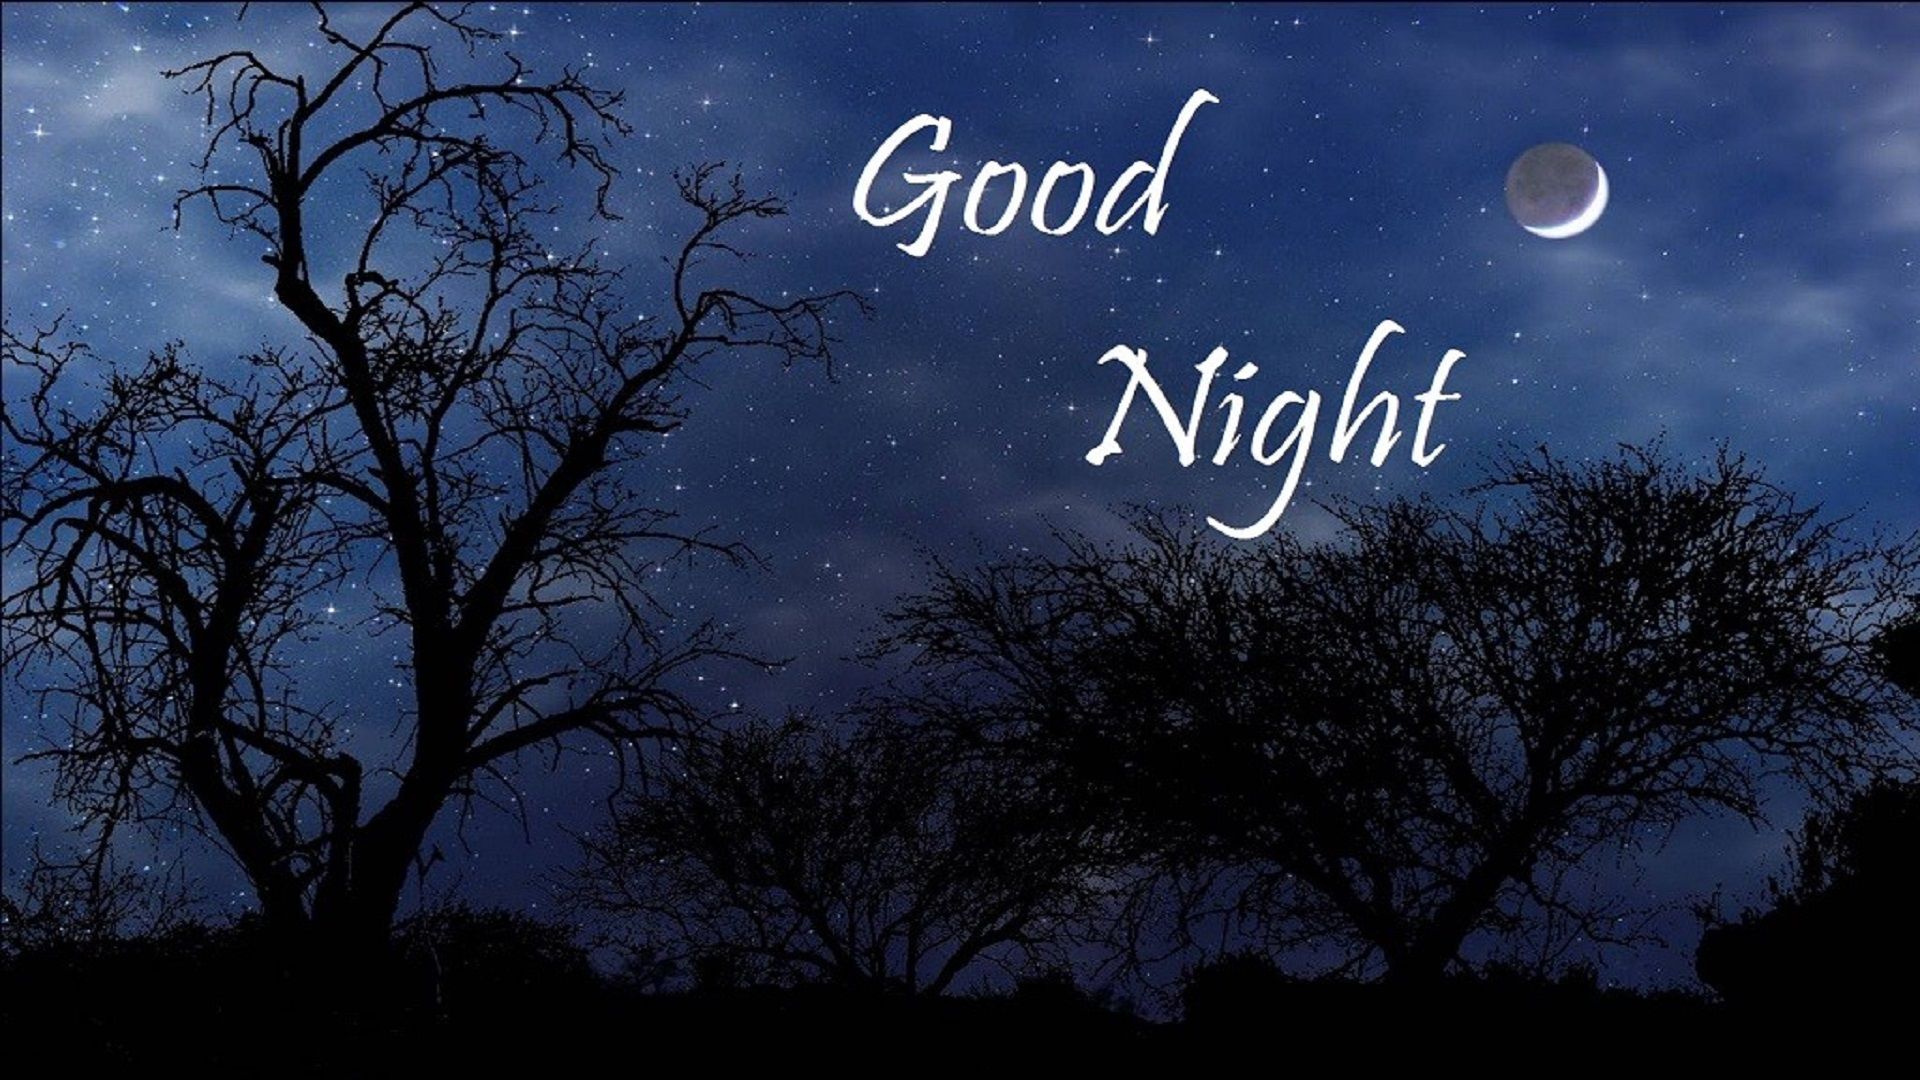 Free download Good Night Sweet Dream Image Wallpaper HD Good